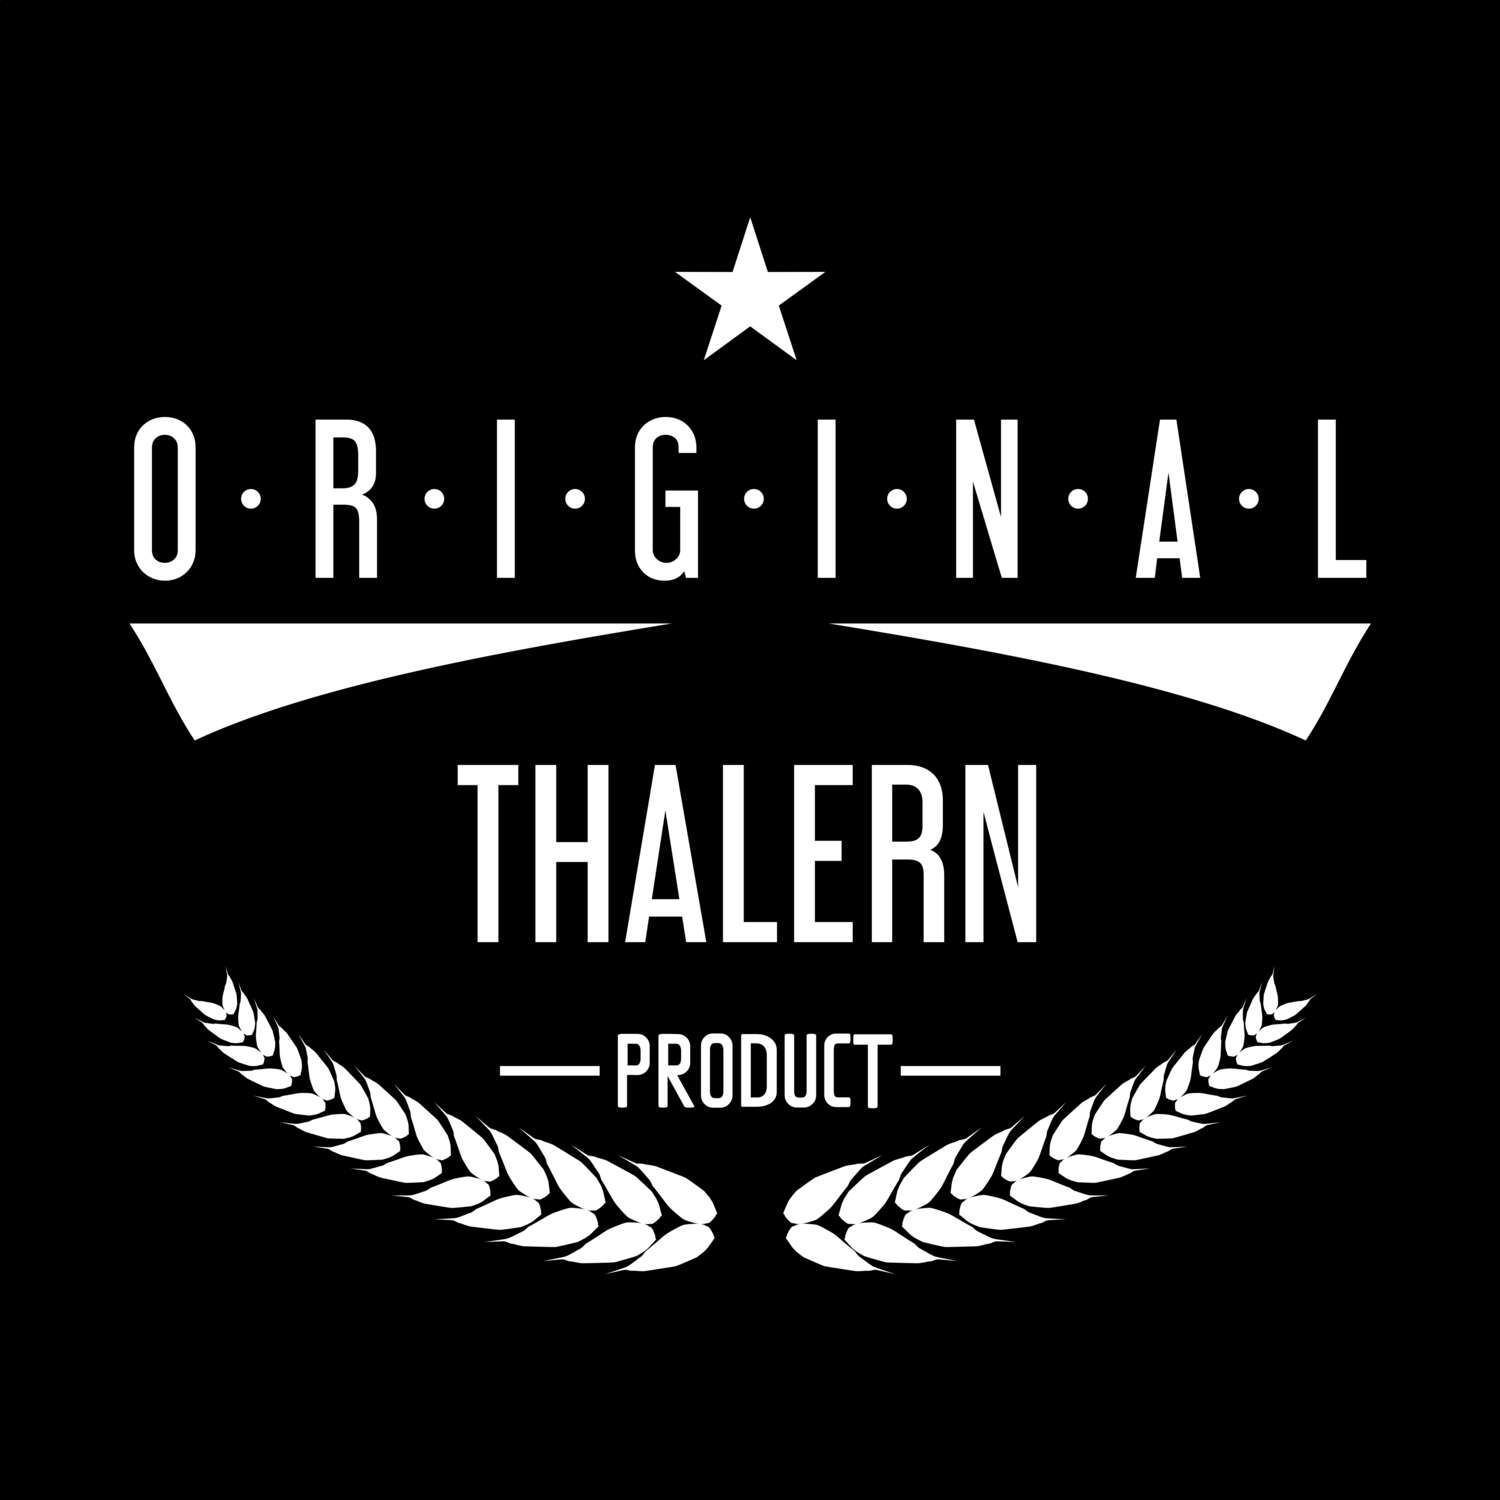 Thalern T-Shirt »Original Product«